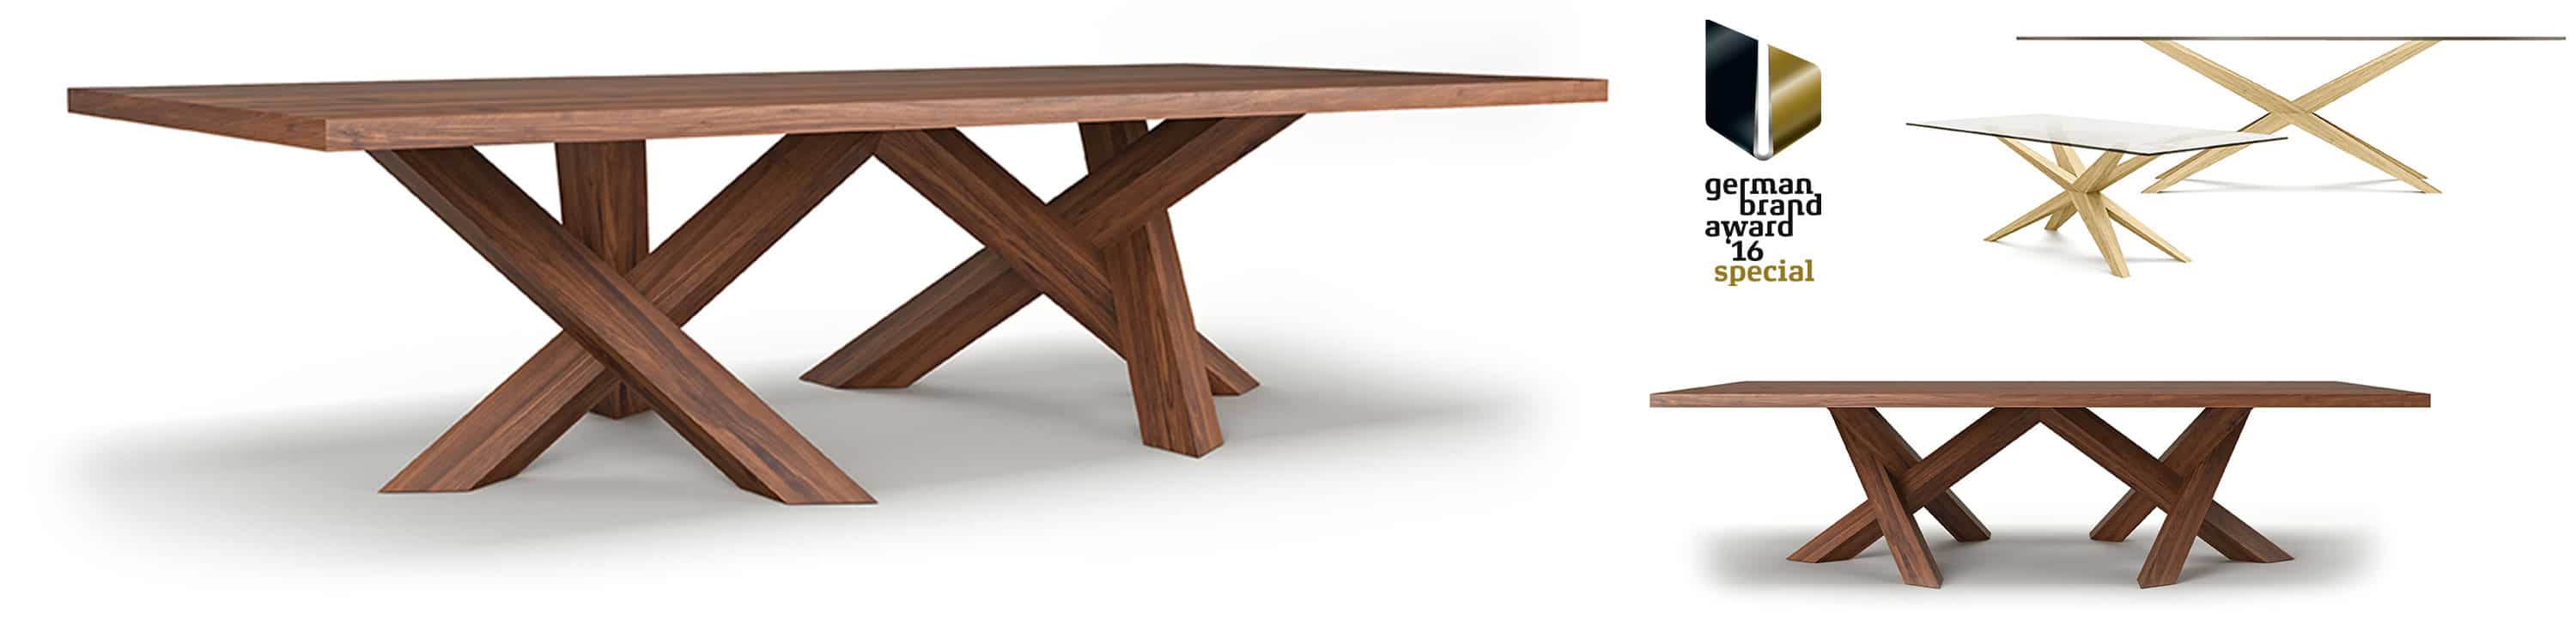 Table design en bois massif (noyer et chêne)